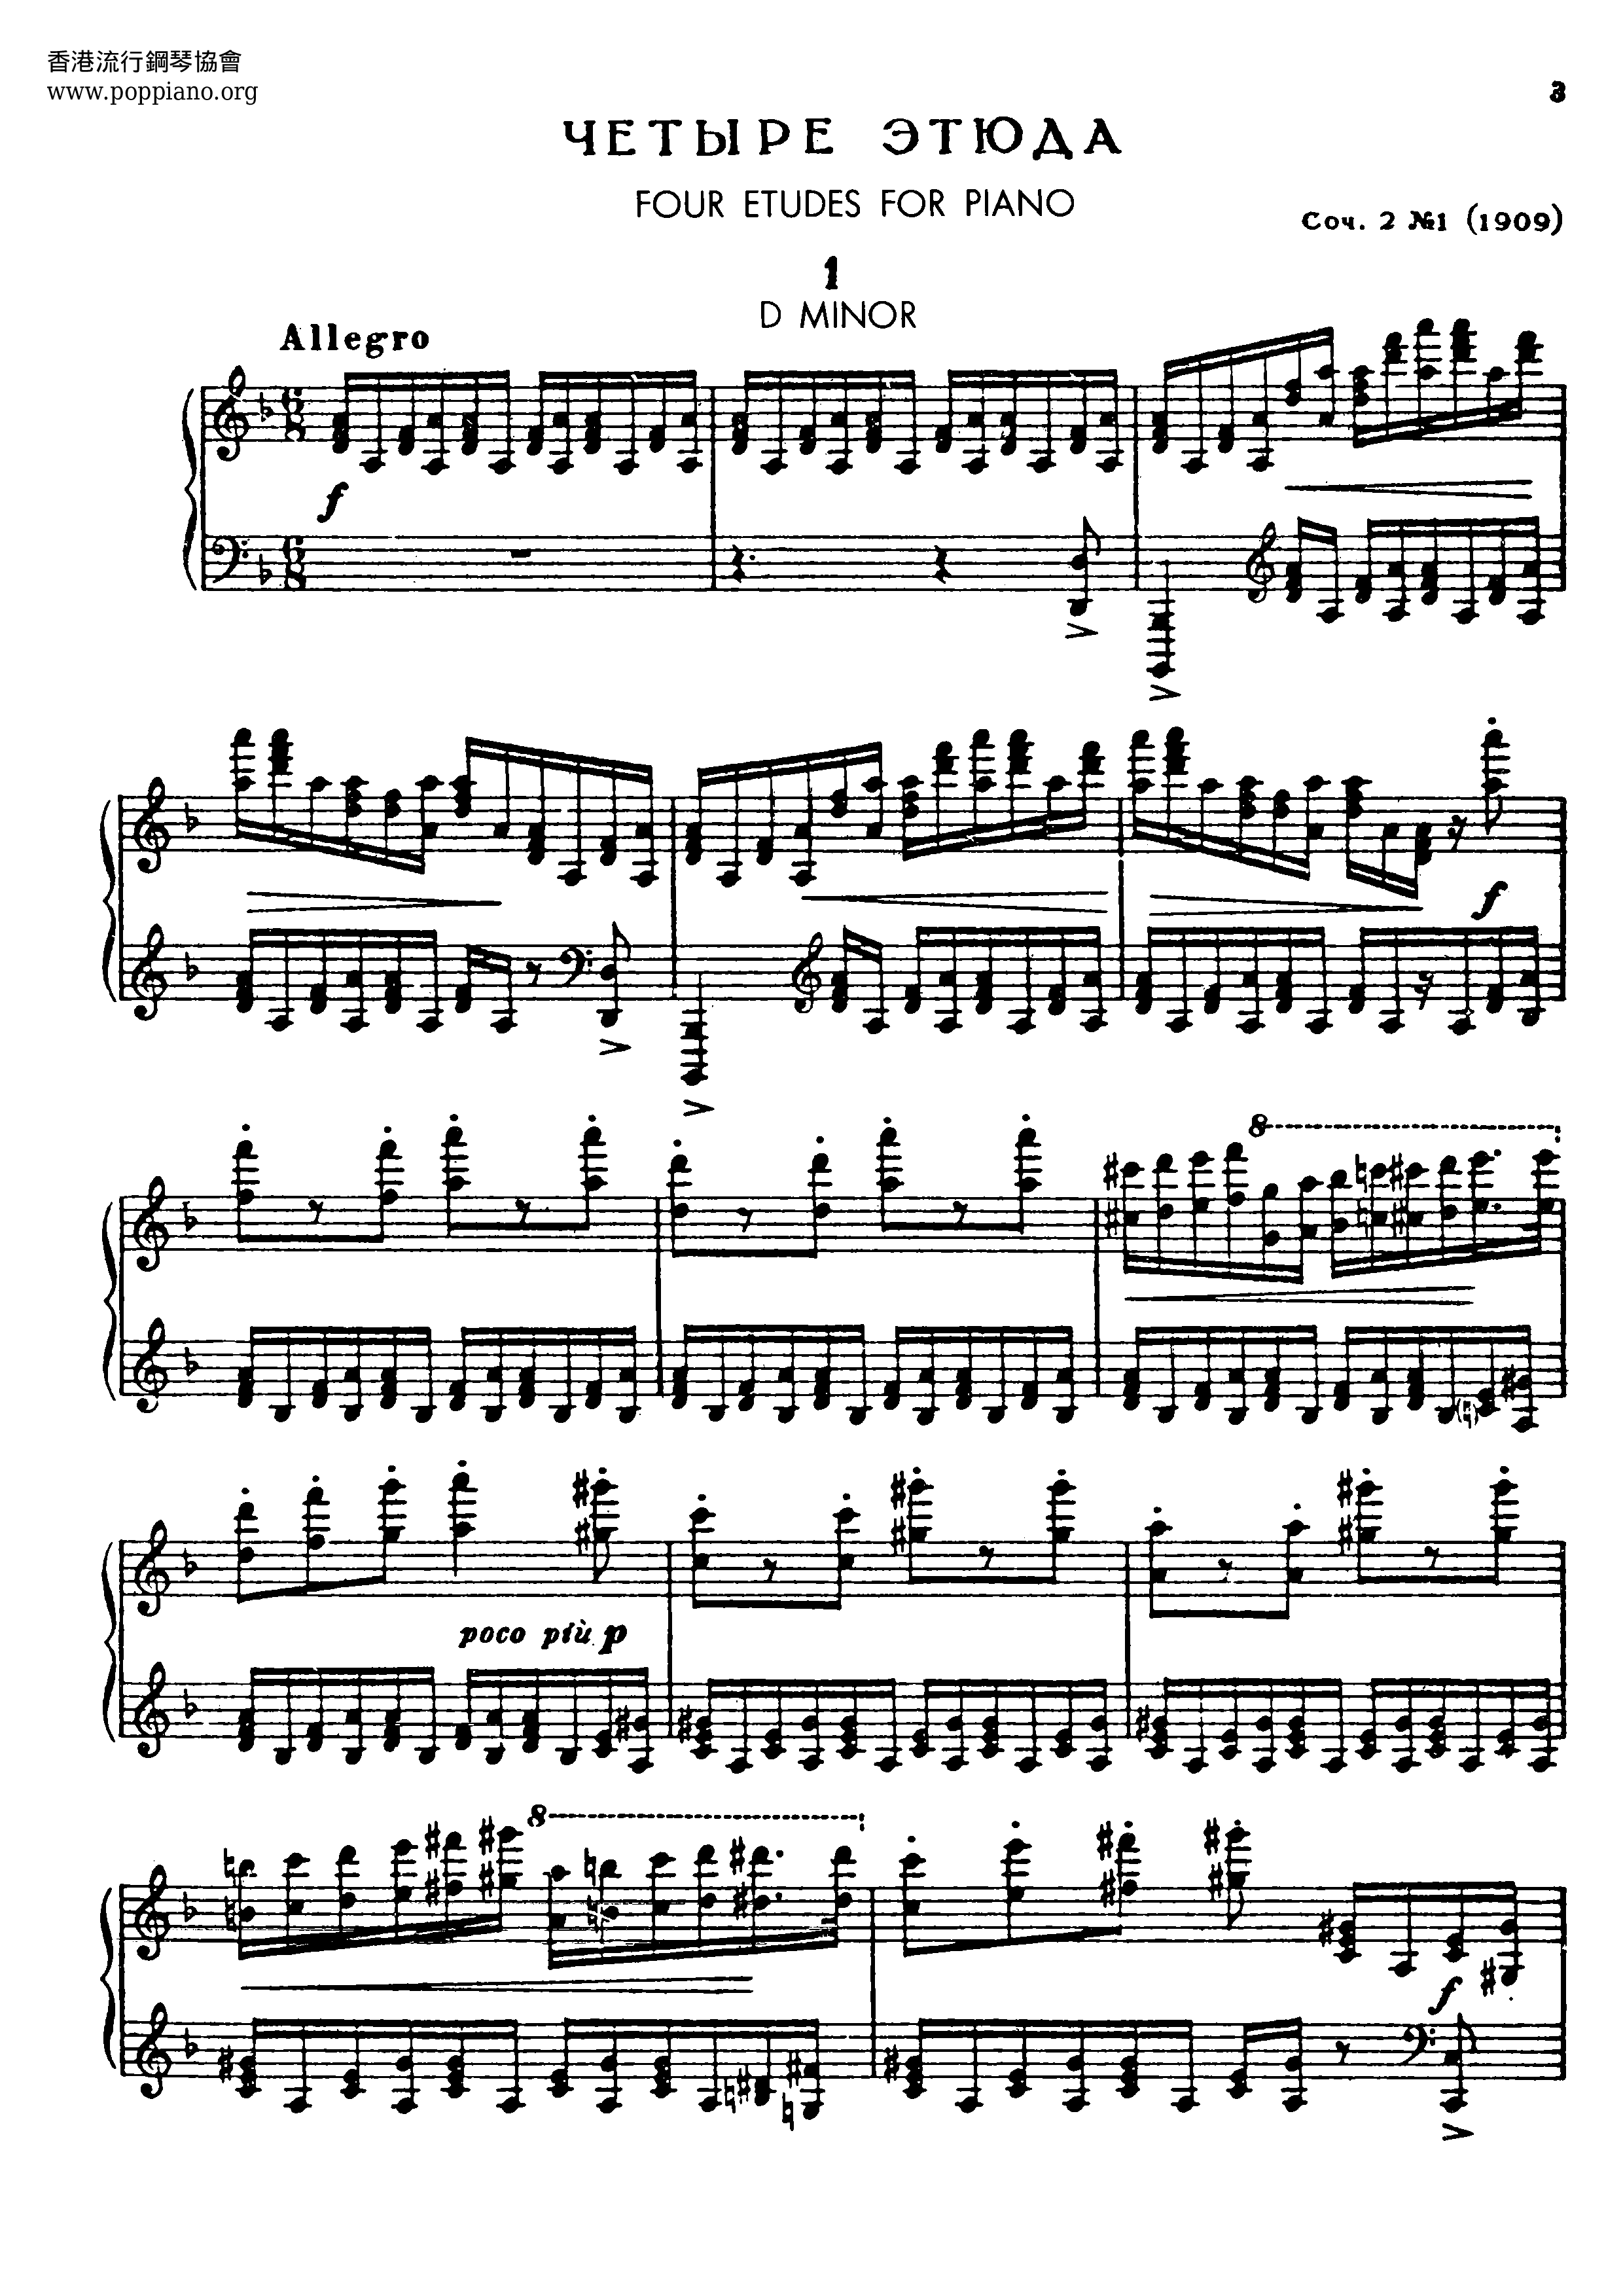 Four Etudes For Piano Score